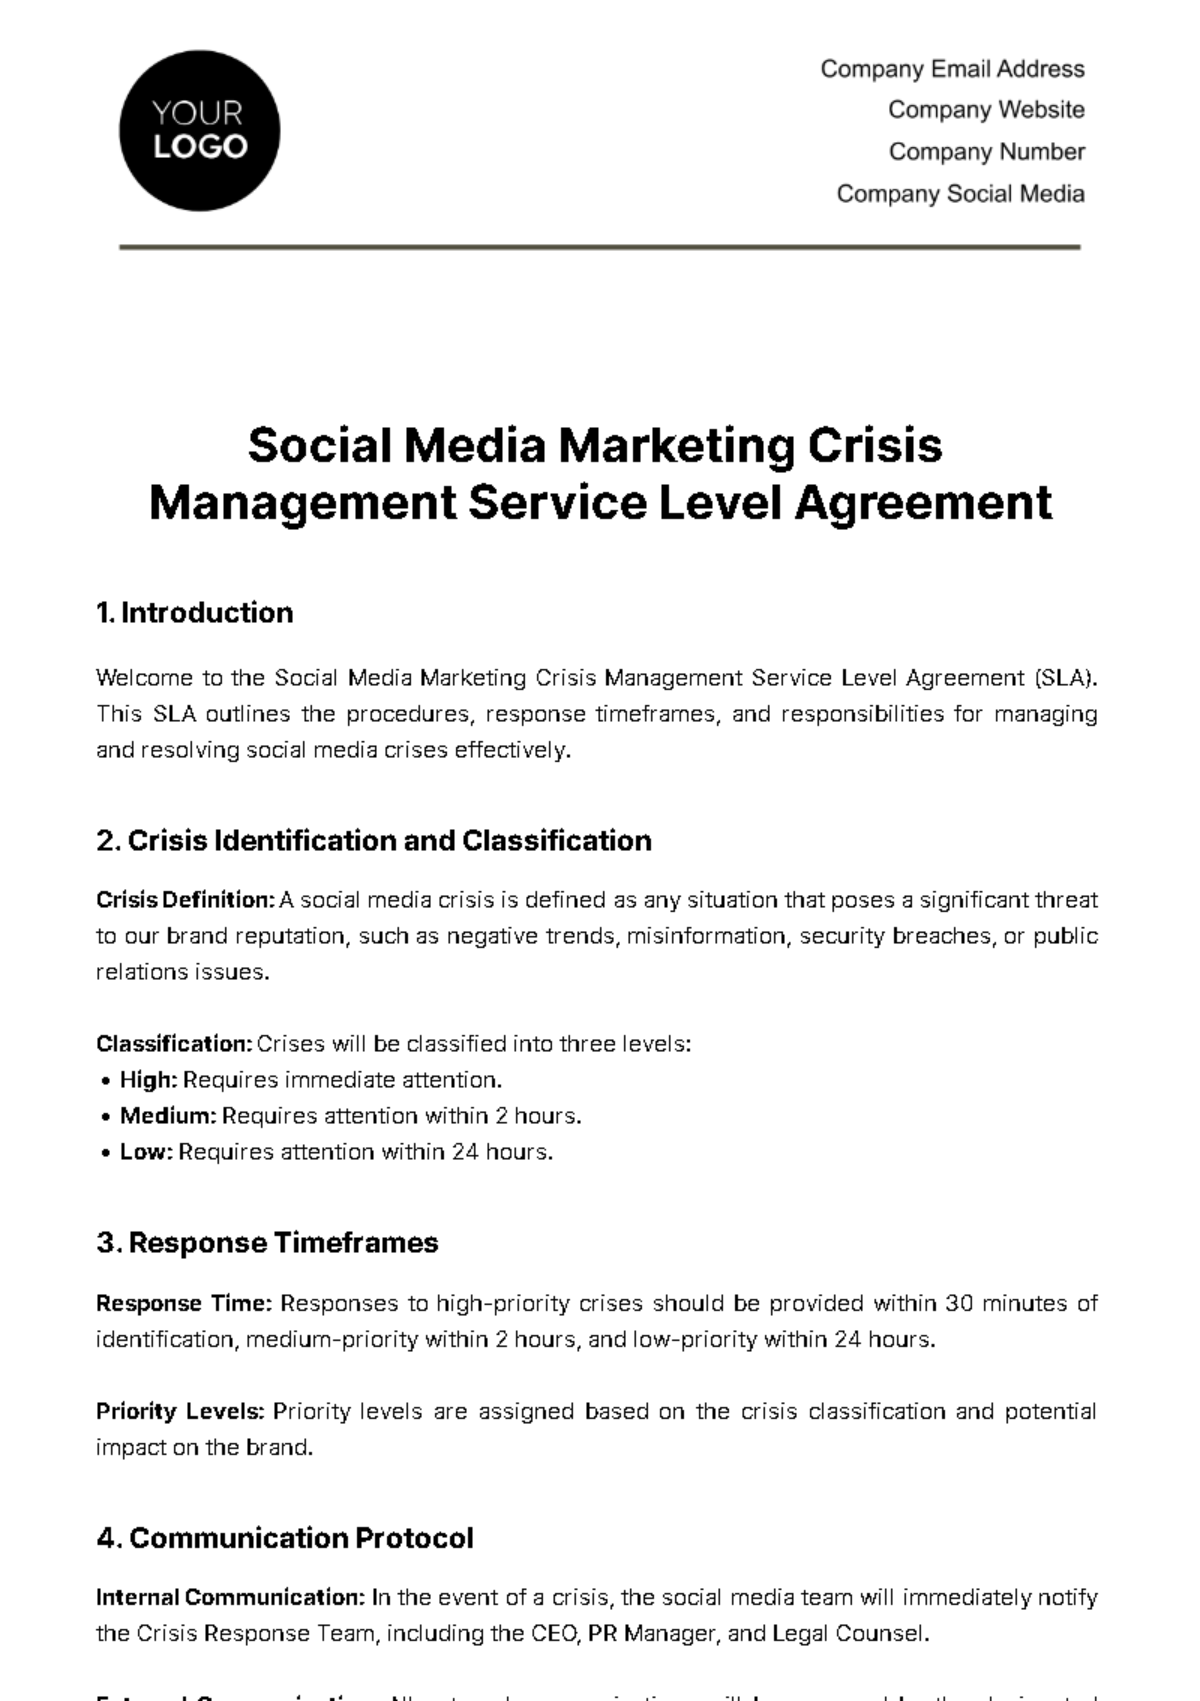 Free Social Media Marketing Crisis Management SLA Template